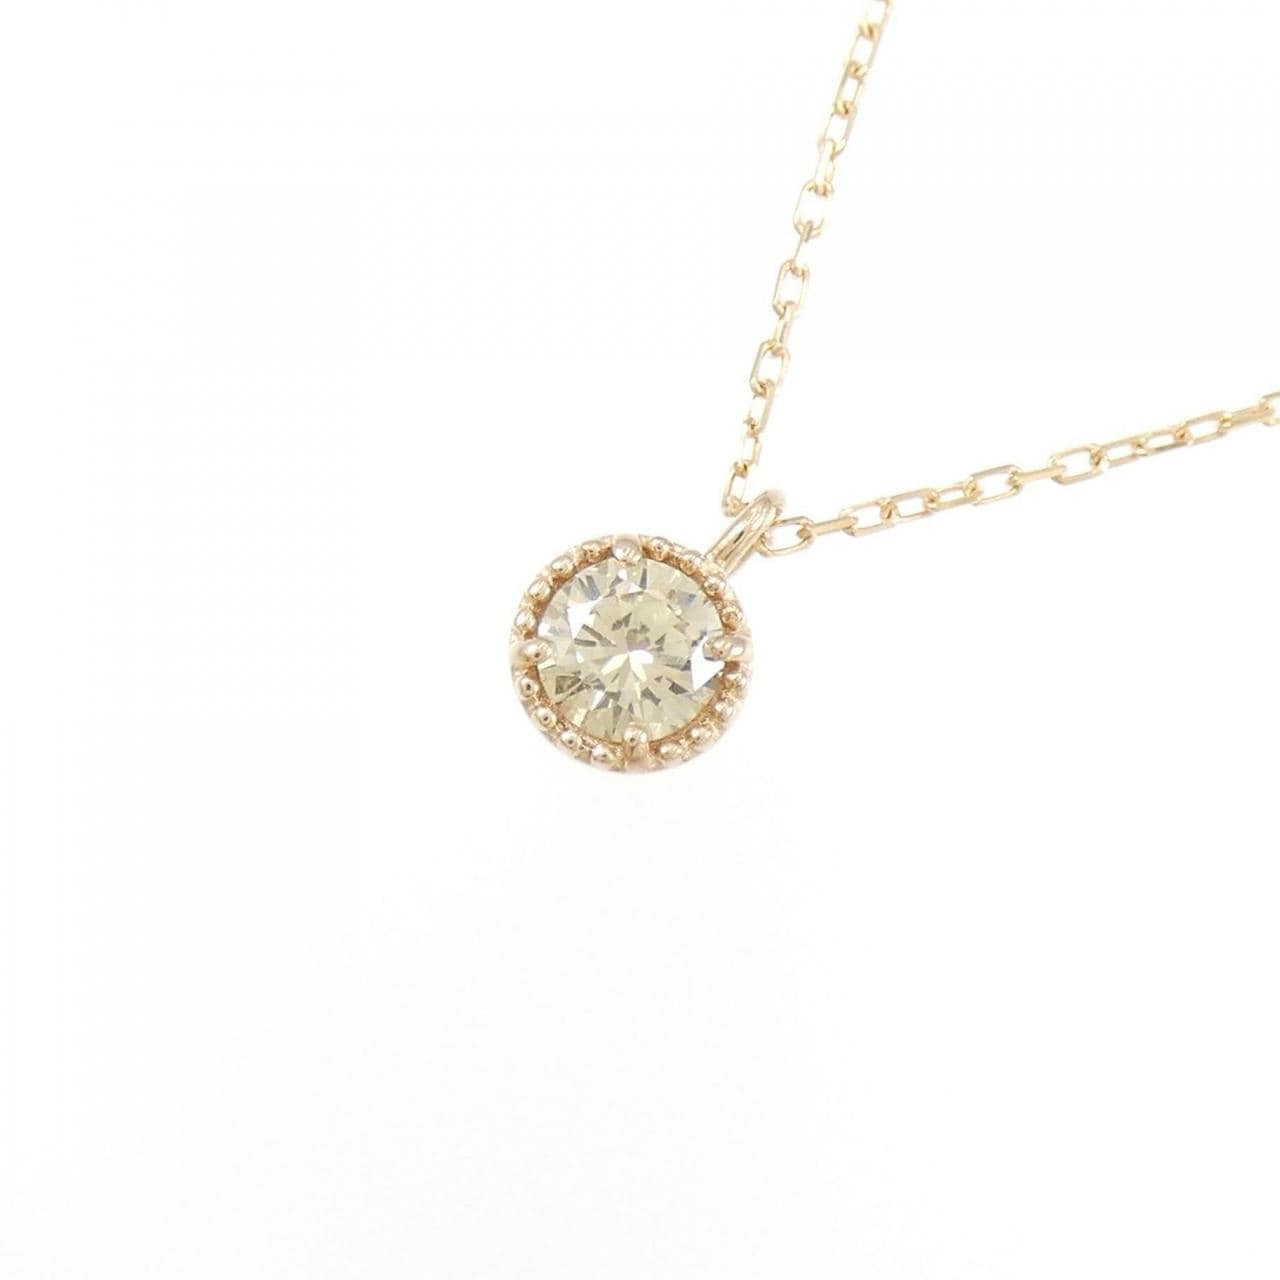 K18PG Solitaire Diamond Necklace 0.23CT